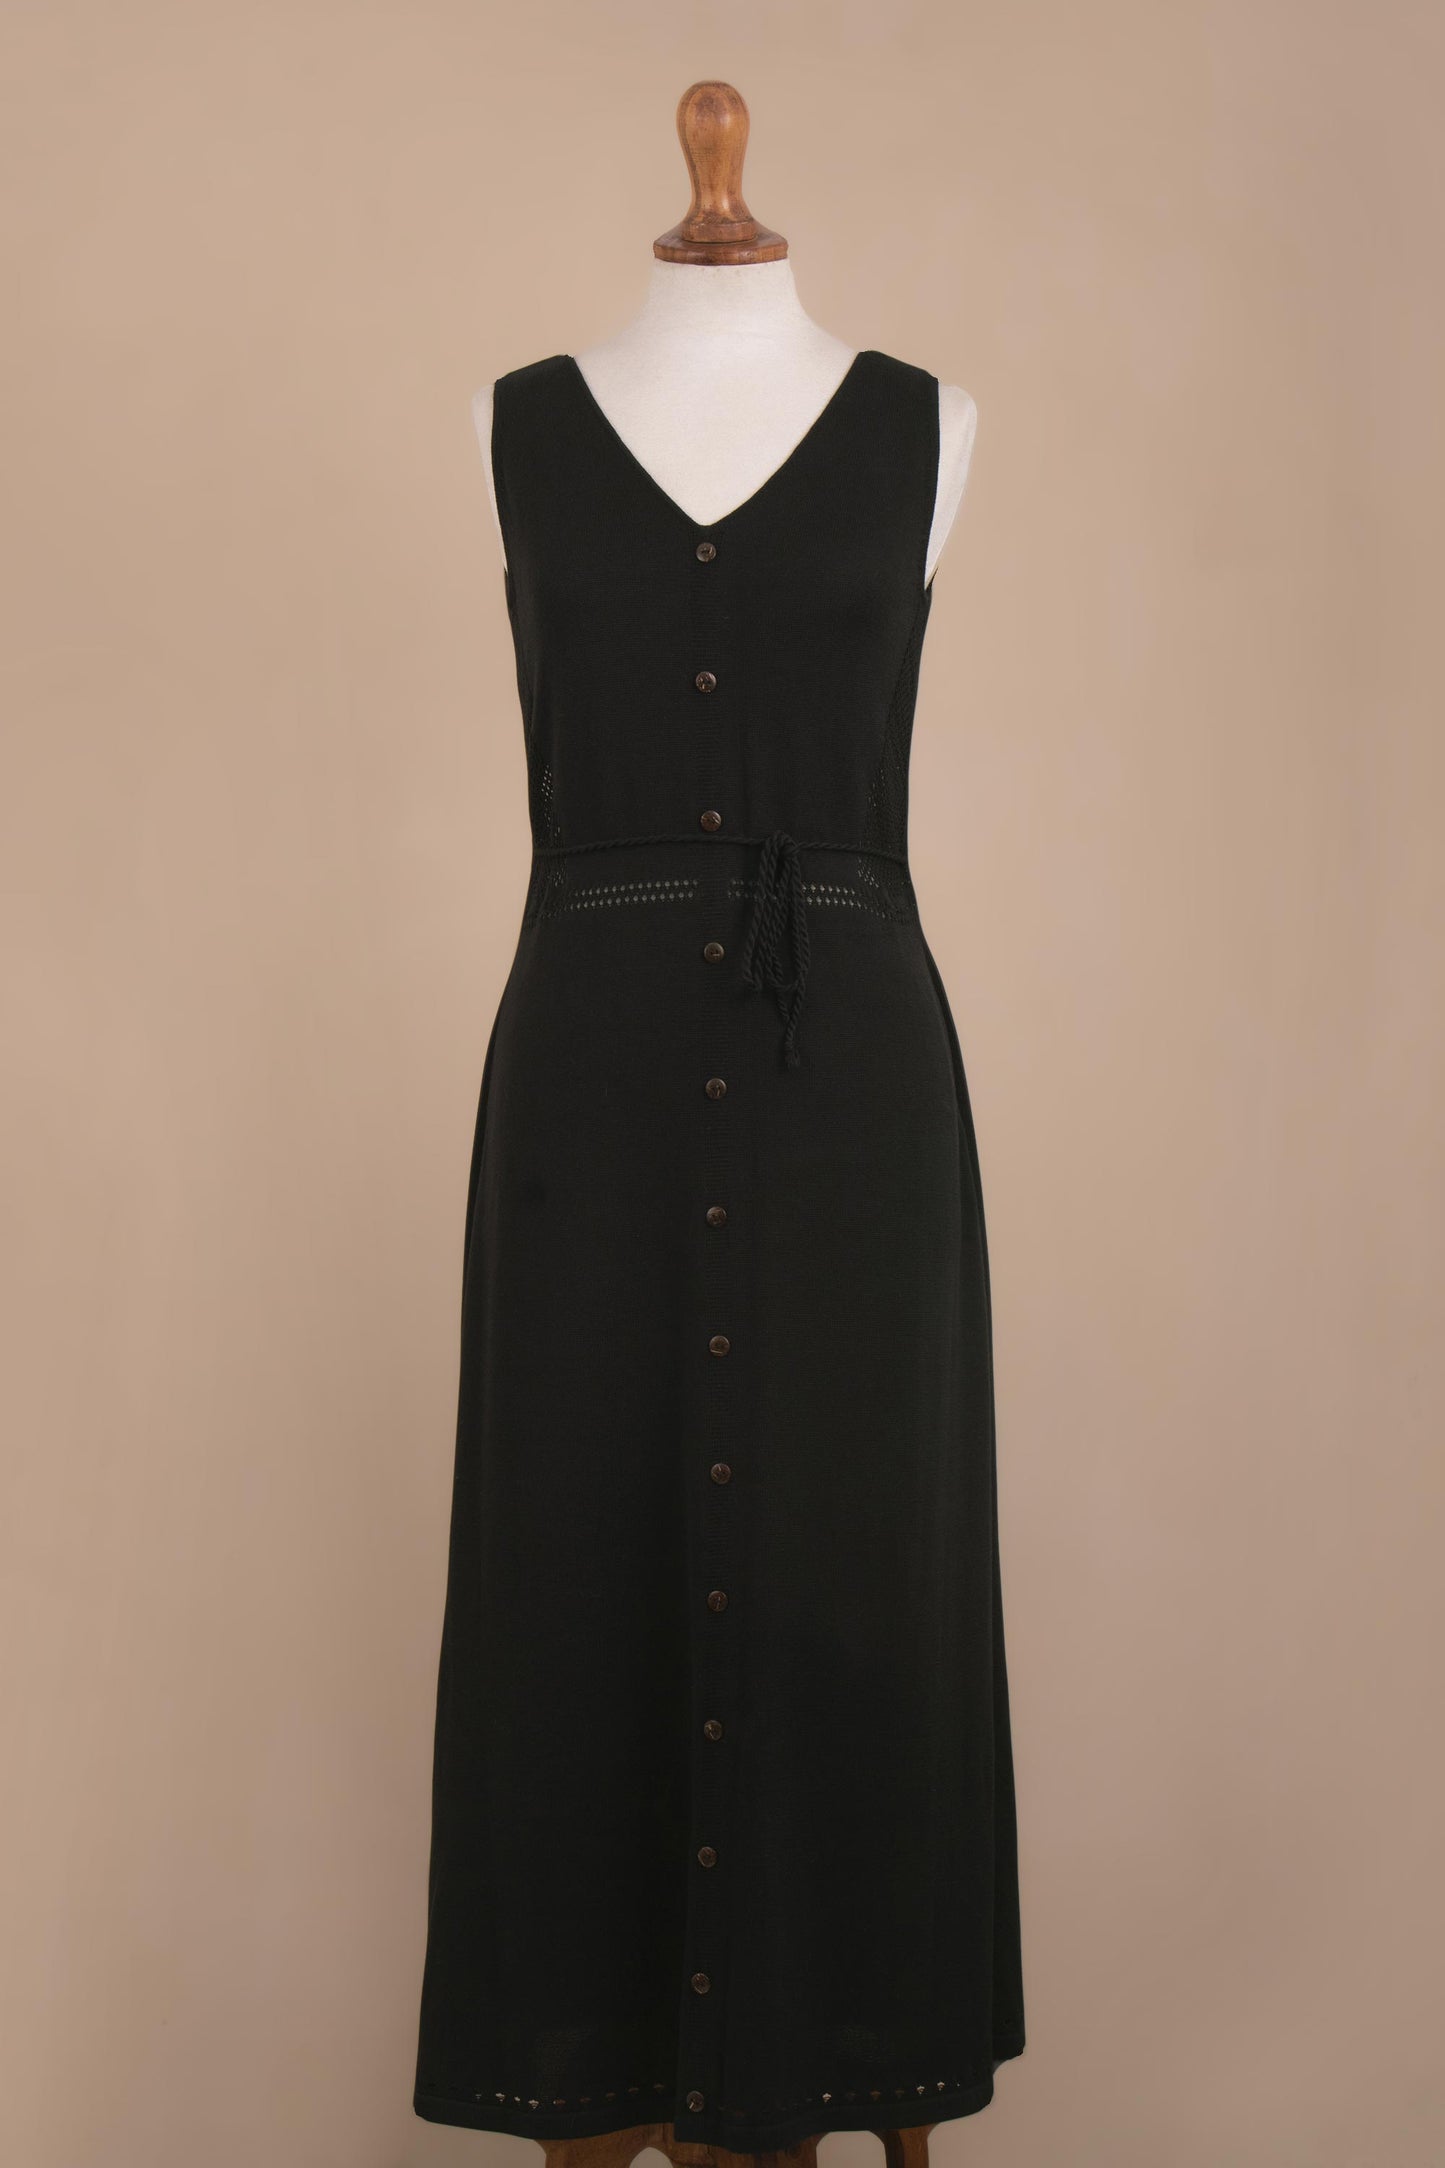 Toqo in Black Organic Cotton Buttoned Maxi Dress in Black from Peru